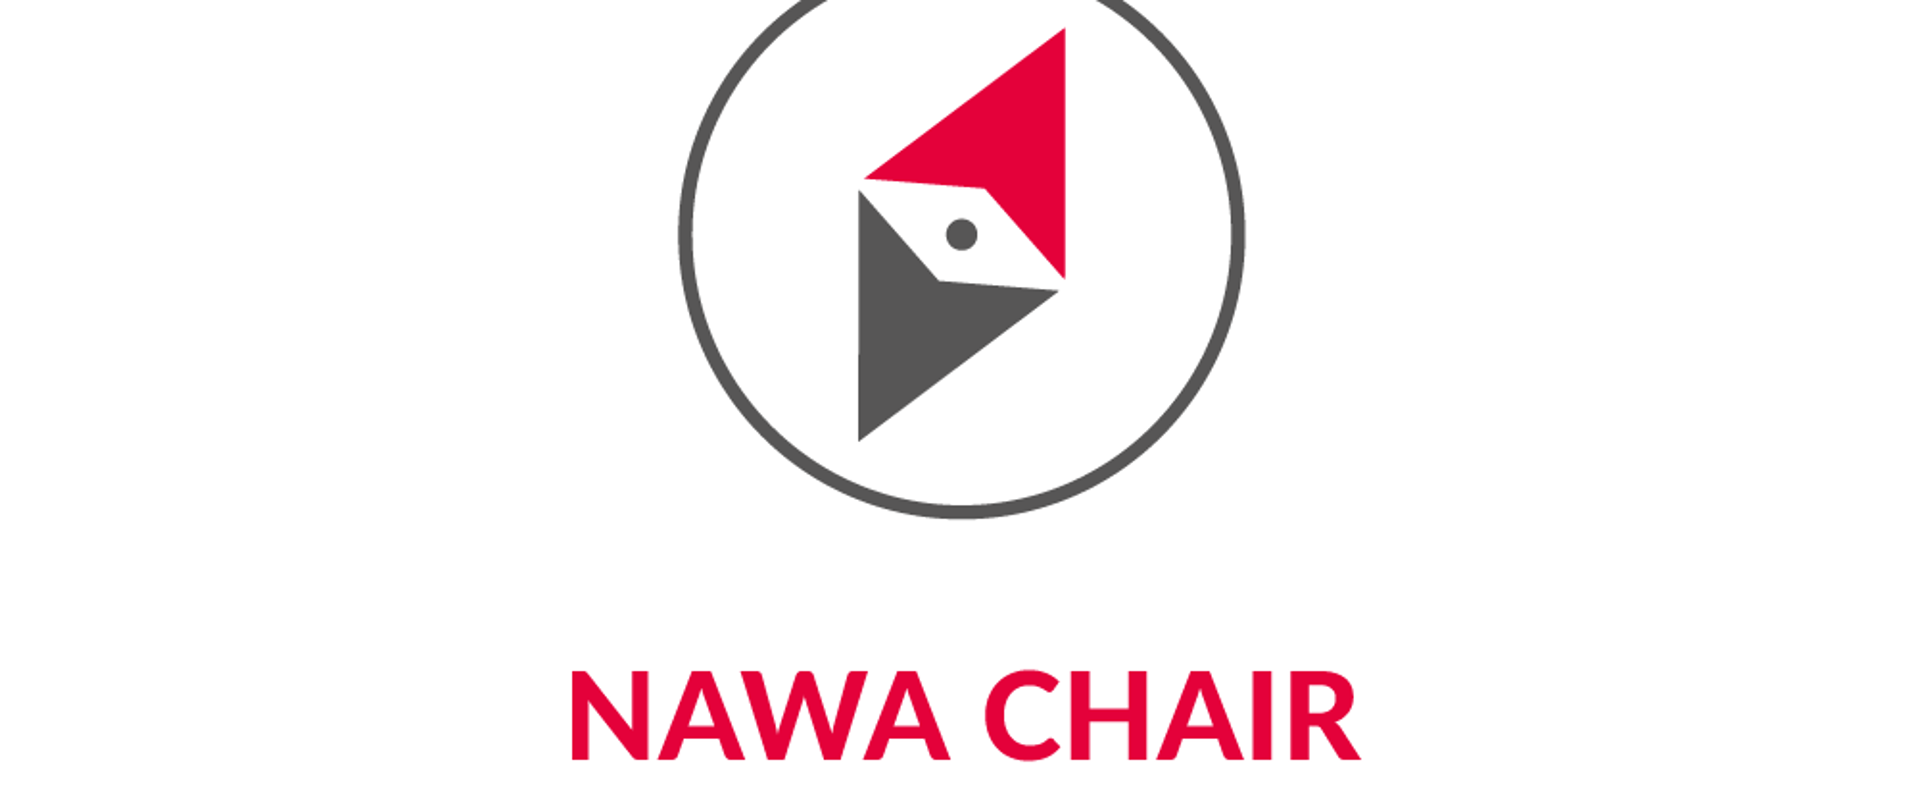 The NAWA Chair Programme